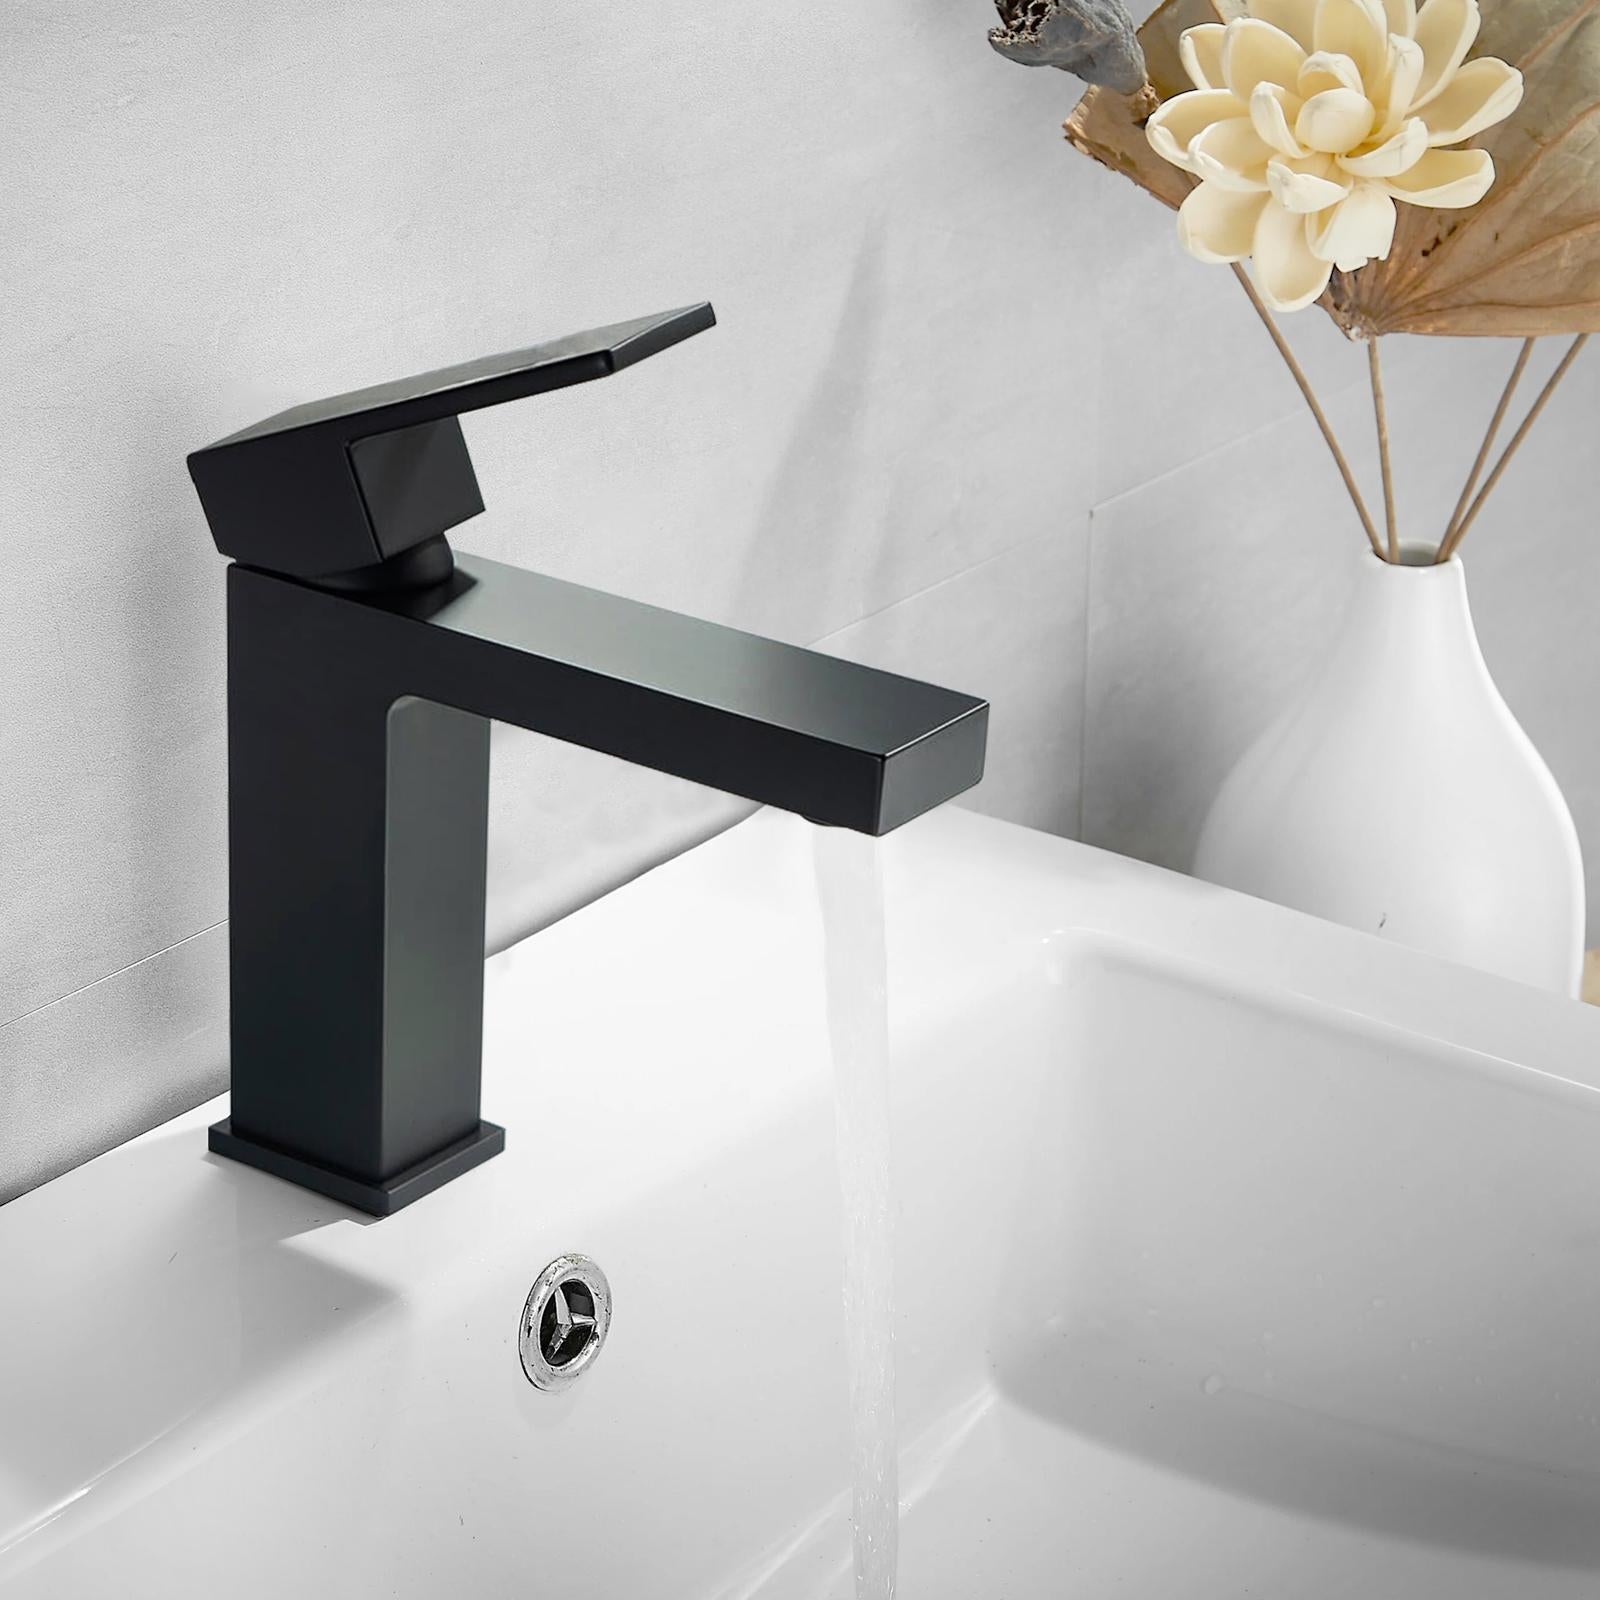 Matt Black Bathroom Faucet Single Handle Brass Bathroom Sink Faucet Lavatory Faucet 1.2 GPM